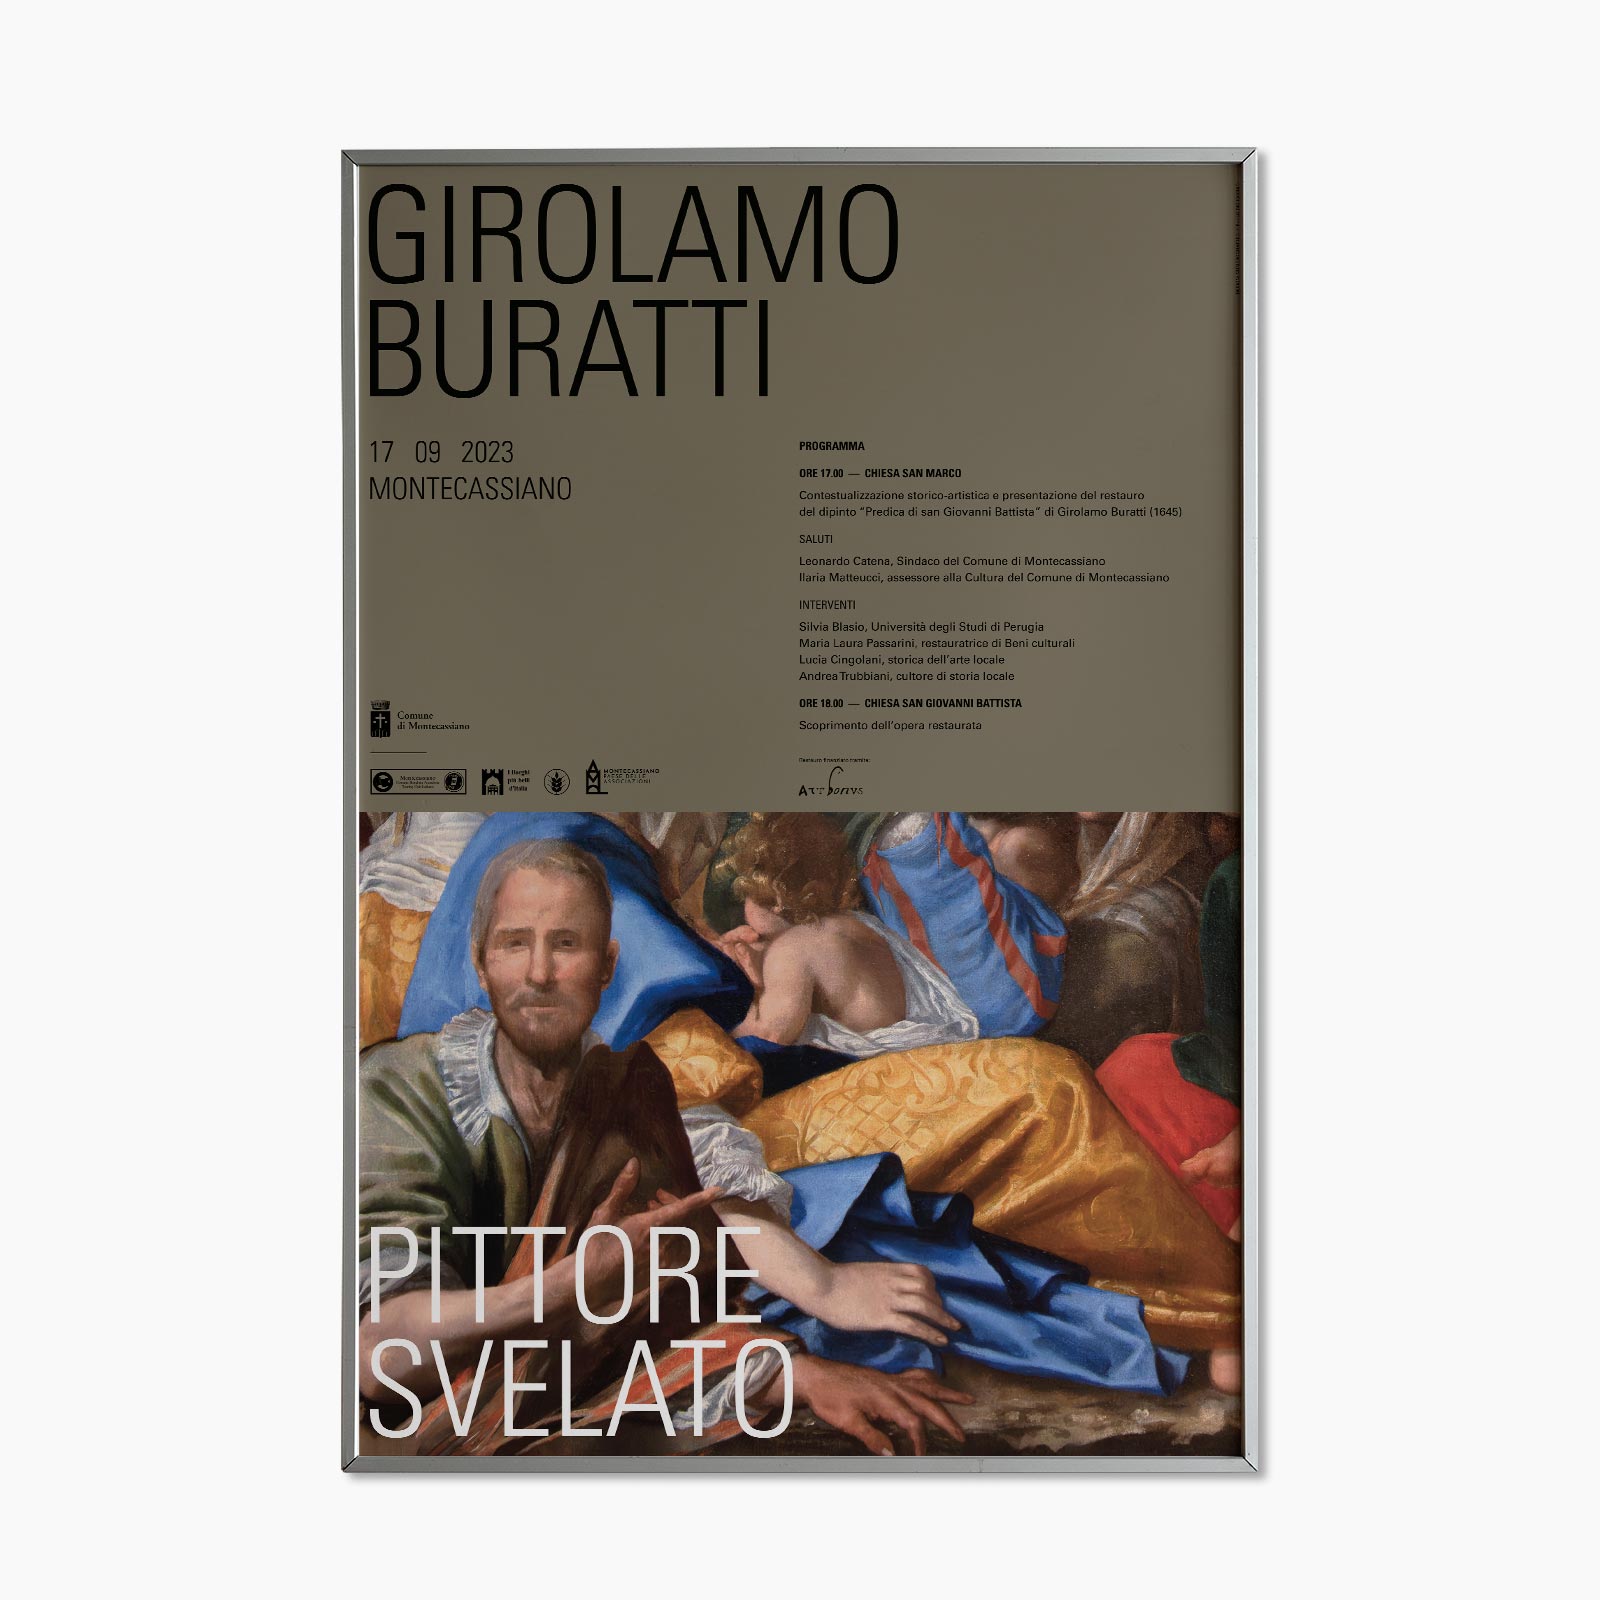 Girolamo Buratti manifesto